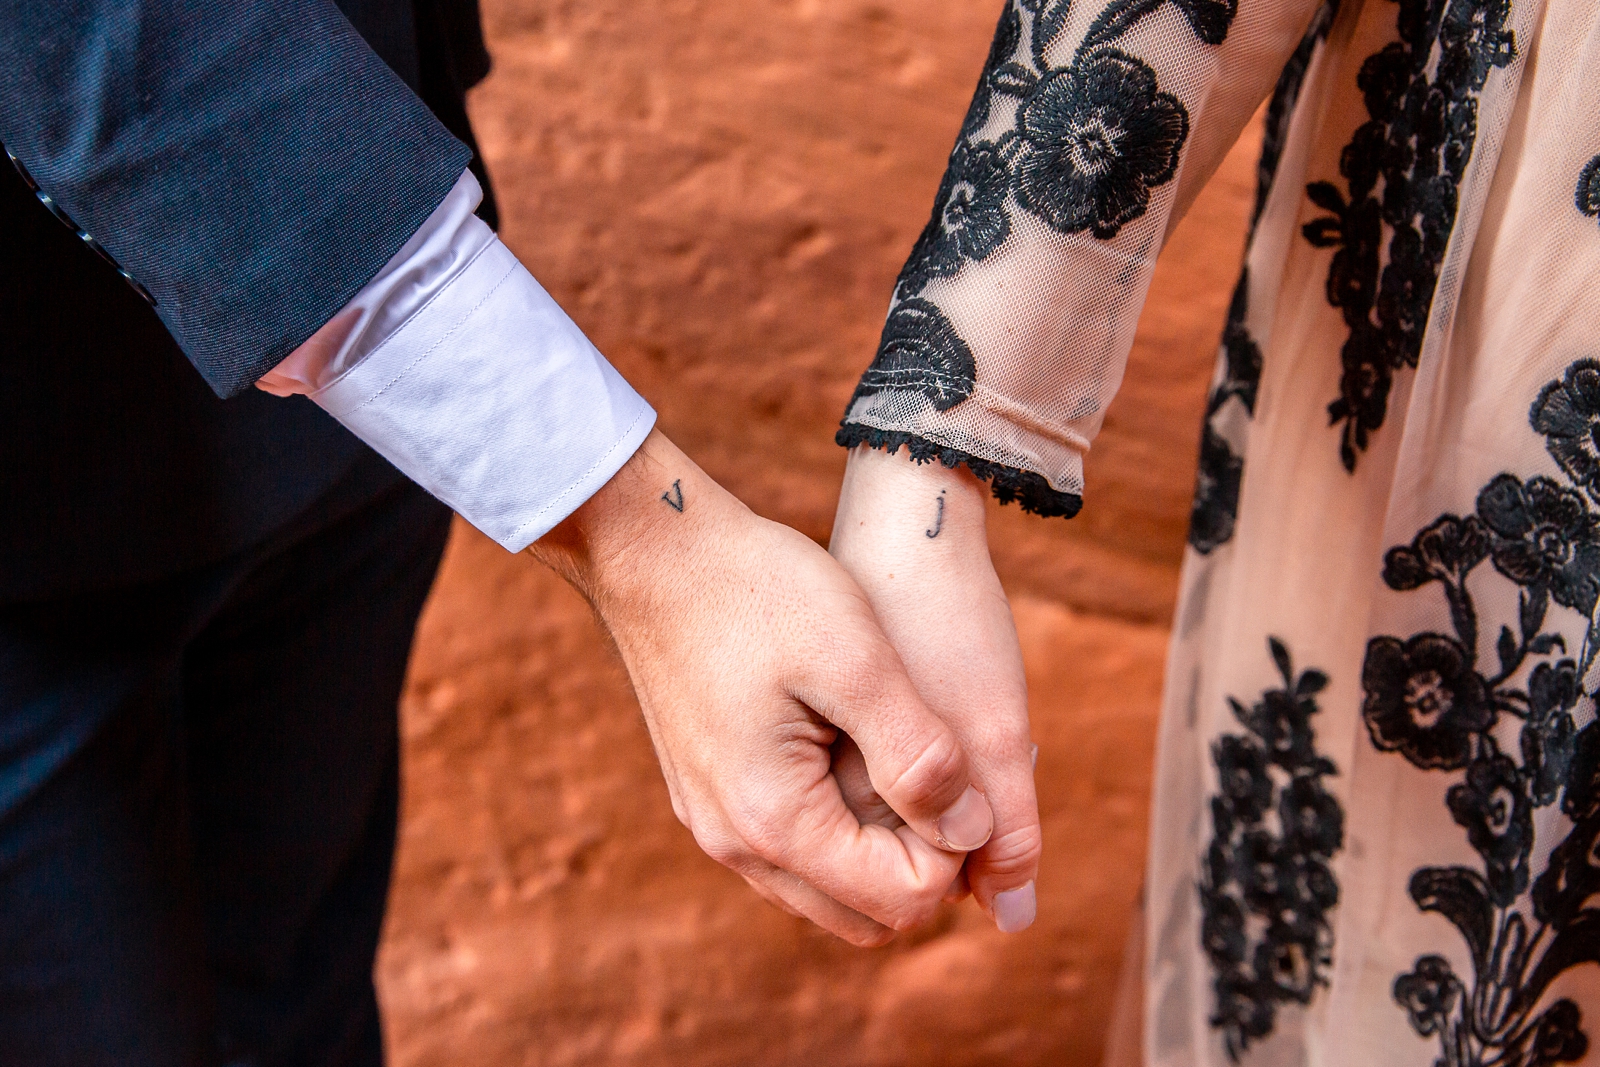 Matching tattoos at this Utah slot canyon elopement.